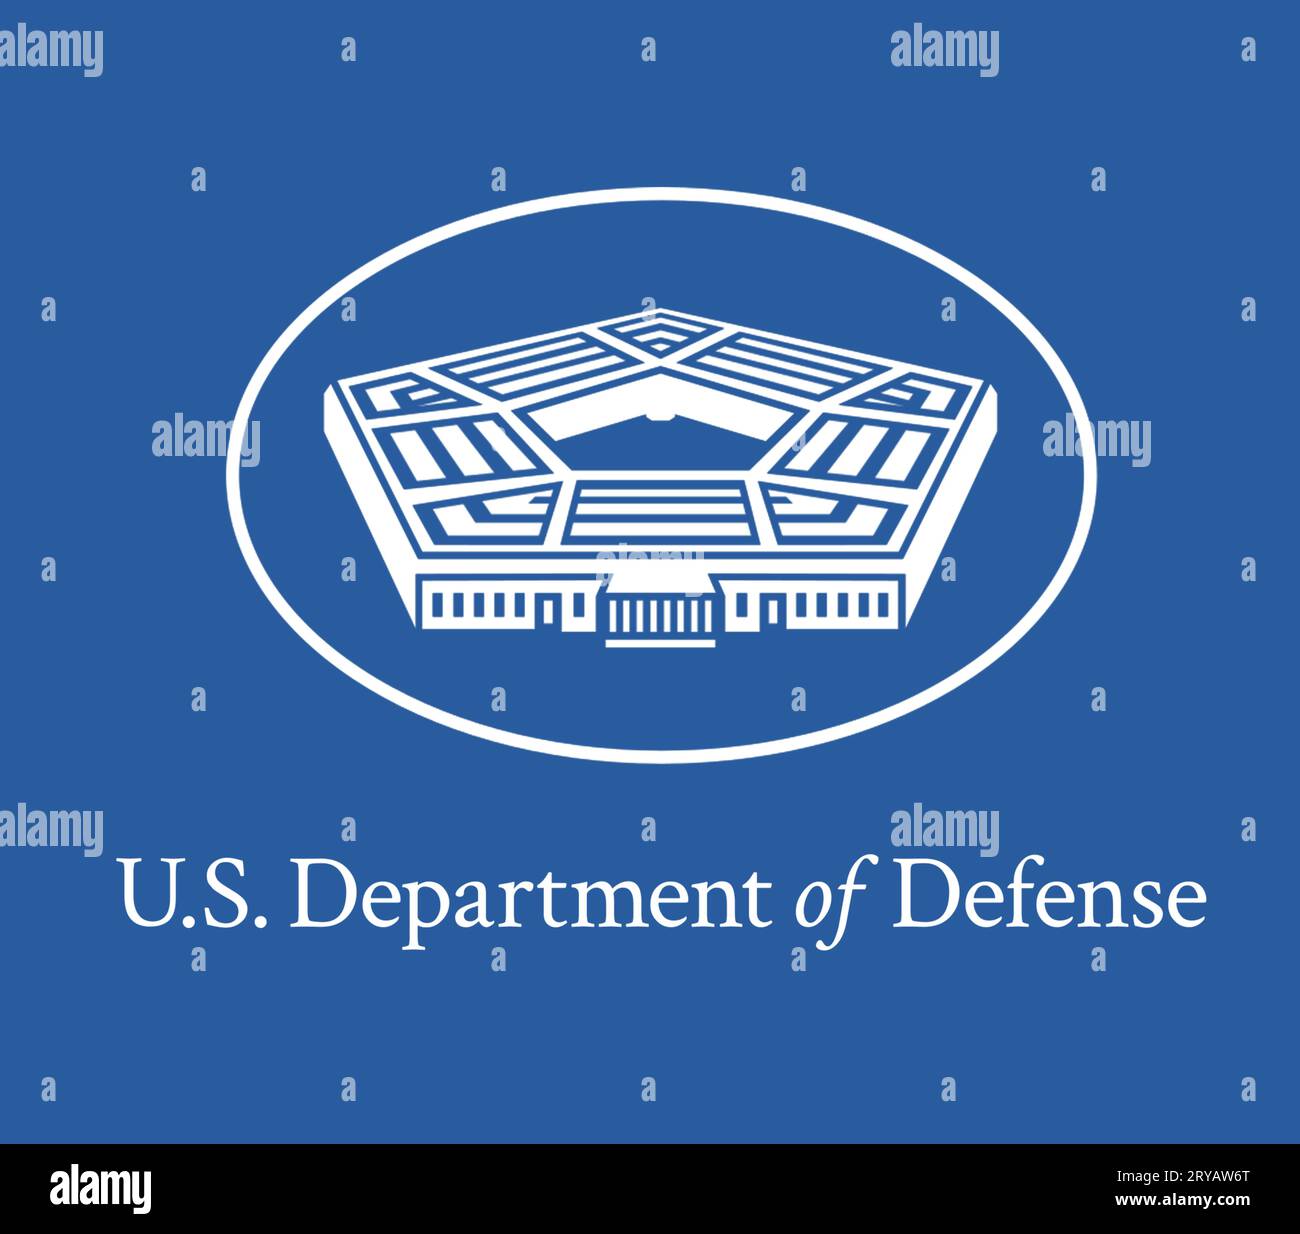 United States Department of Defense emblem Stock Photo